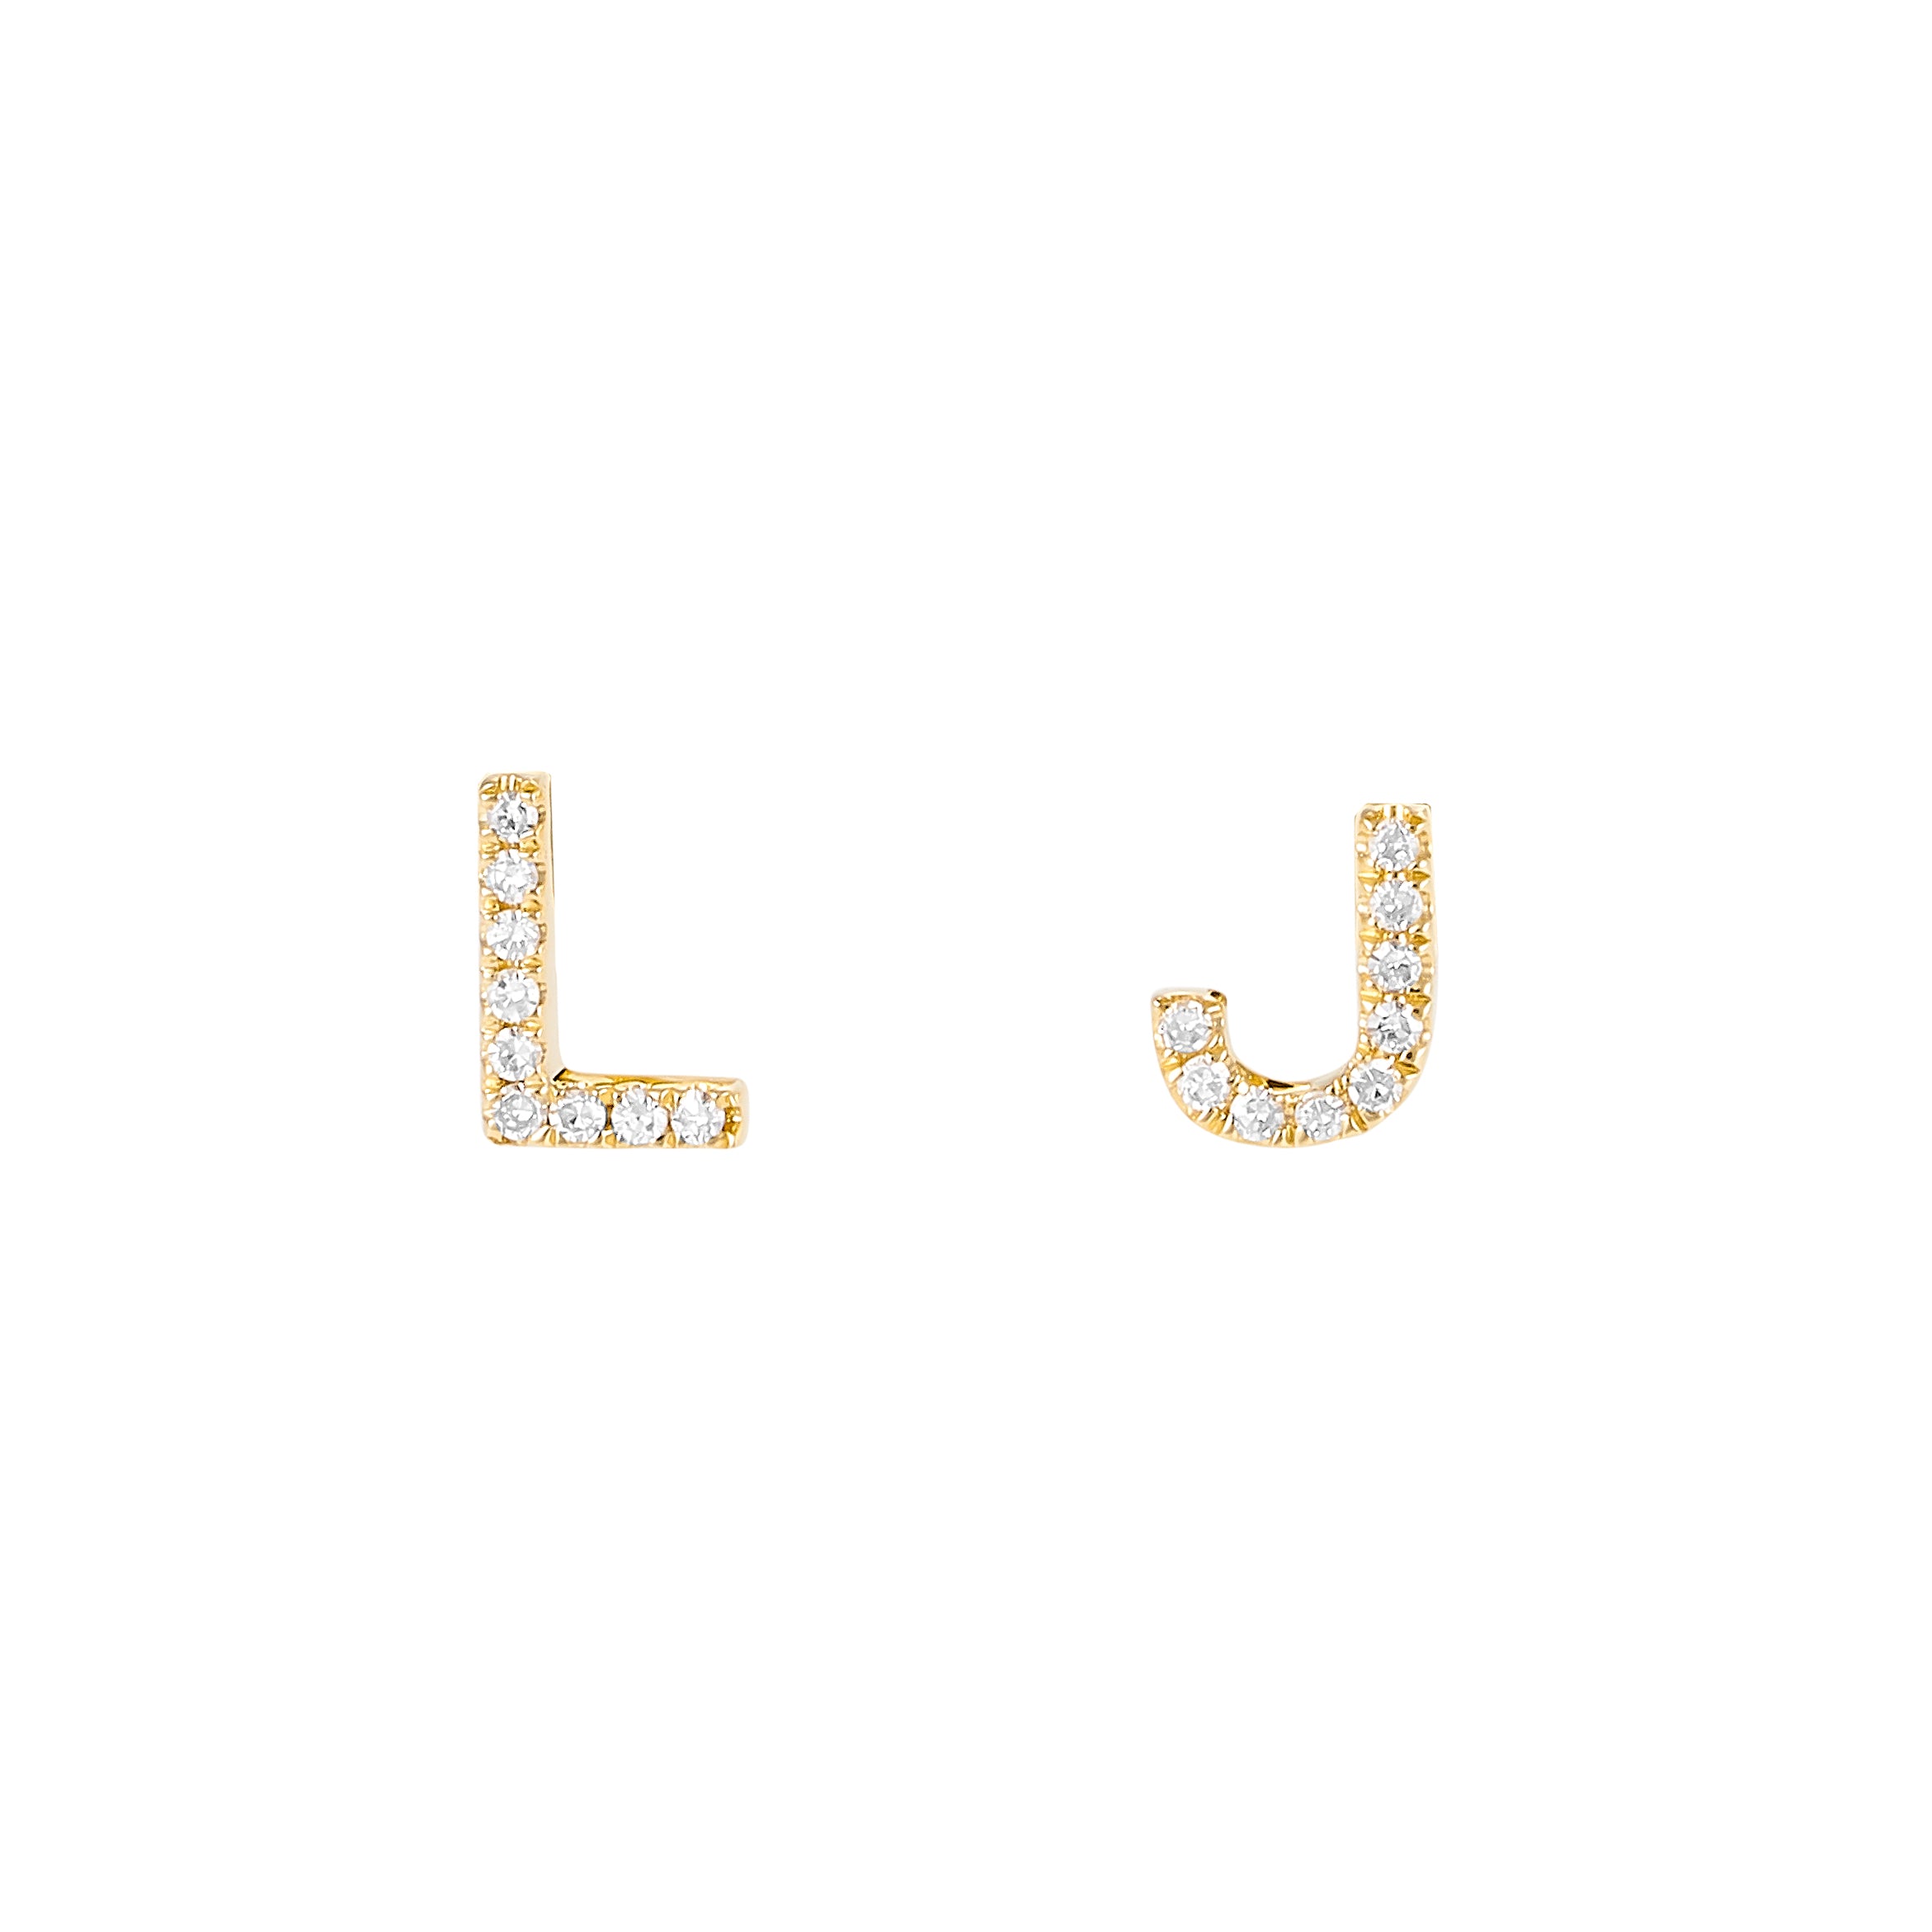 Adorable - Diamond Initial Earrings - Lola James Jewelry 